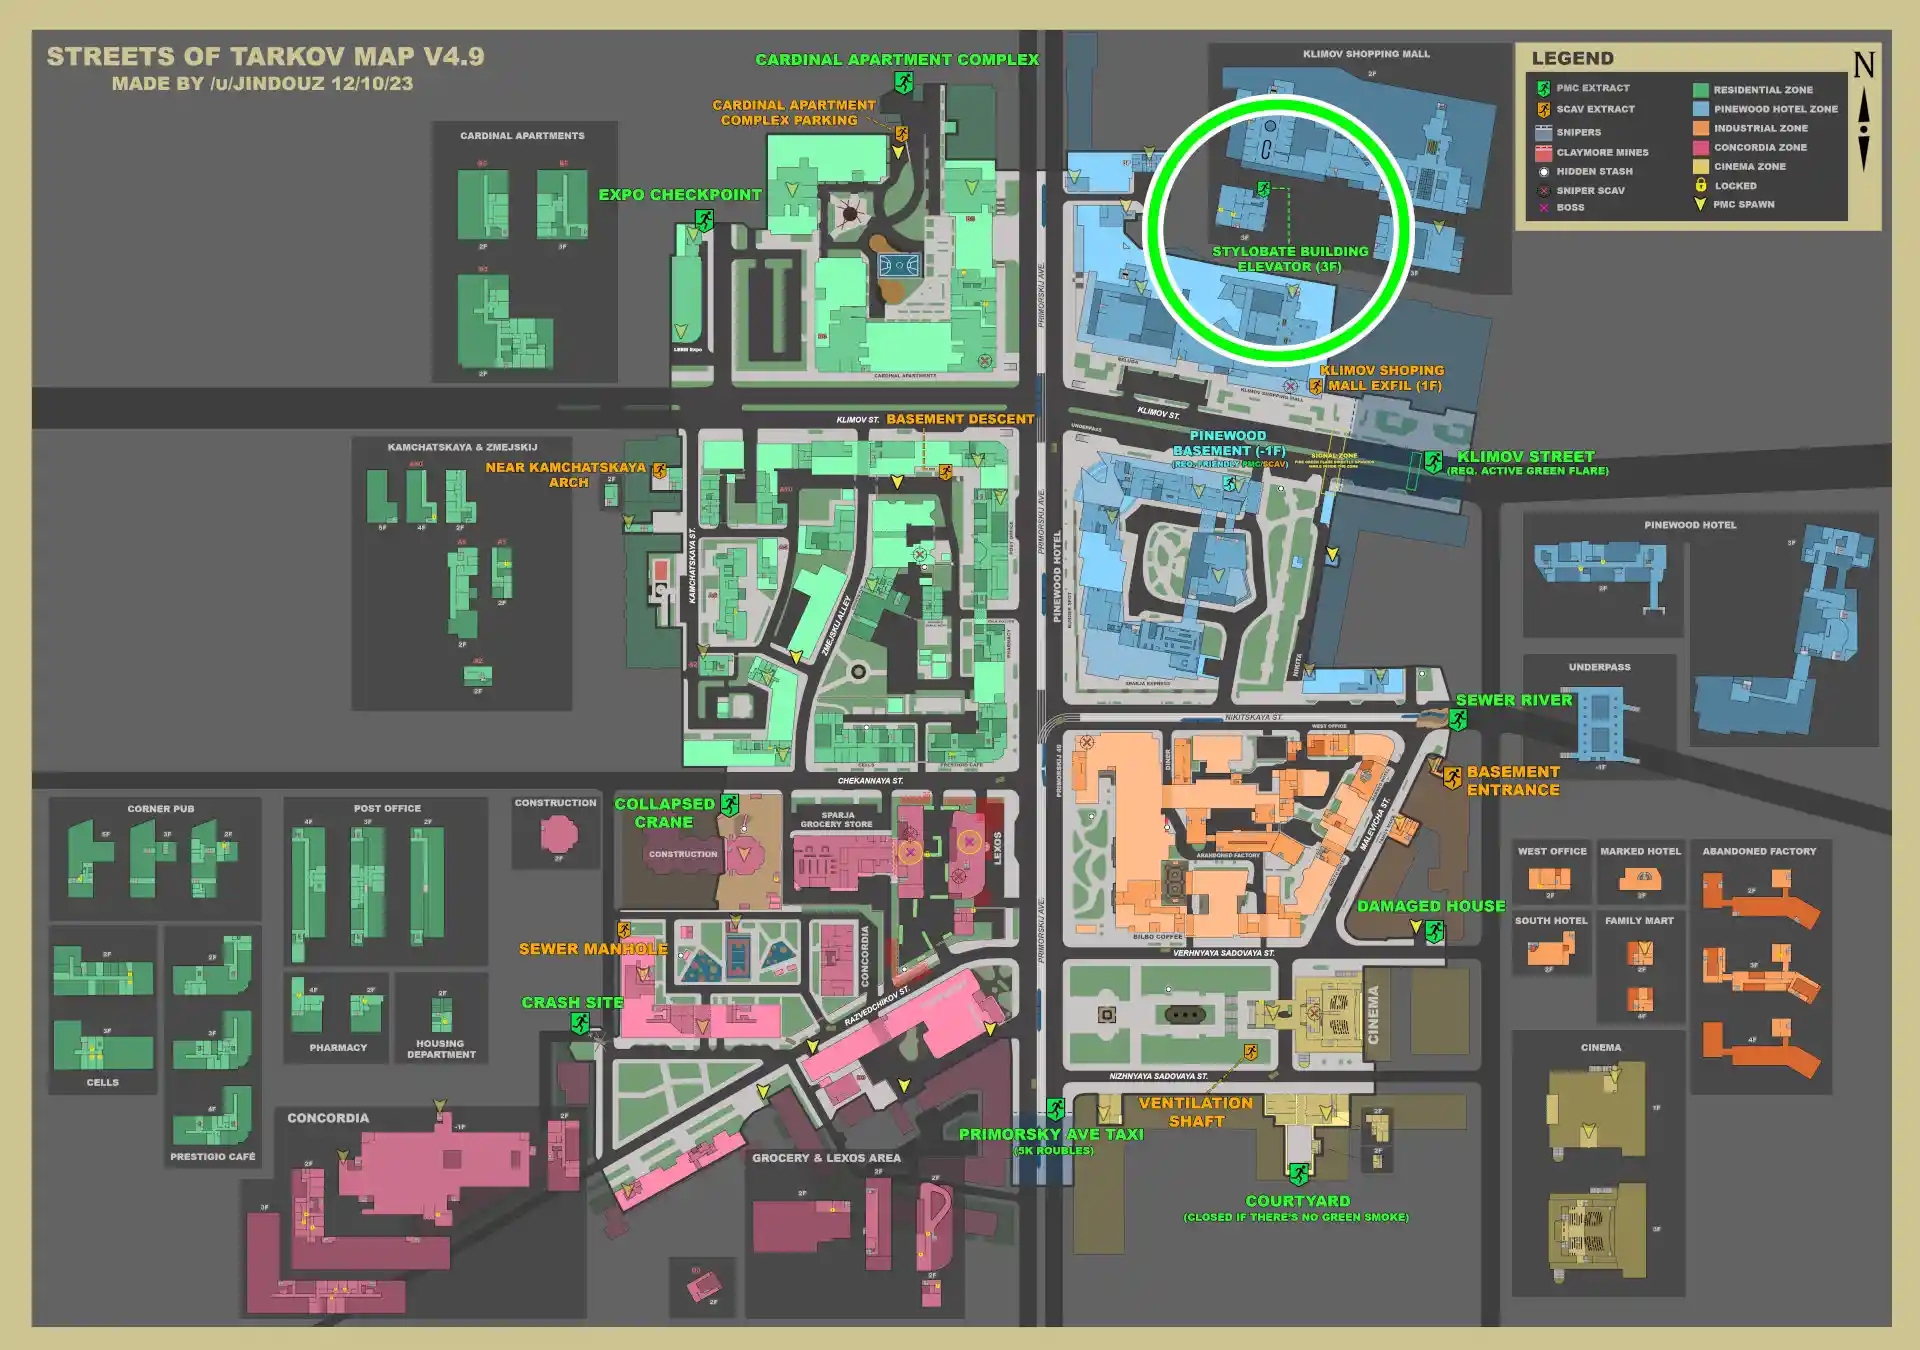 STREETS_OF_TARKOV-ESC-Stylobate_Building_Elevator-MAP.jpg